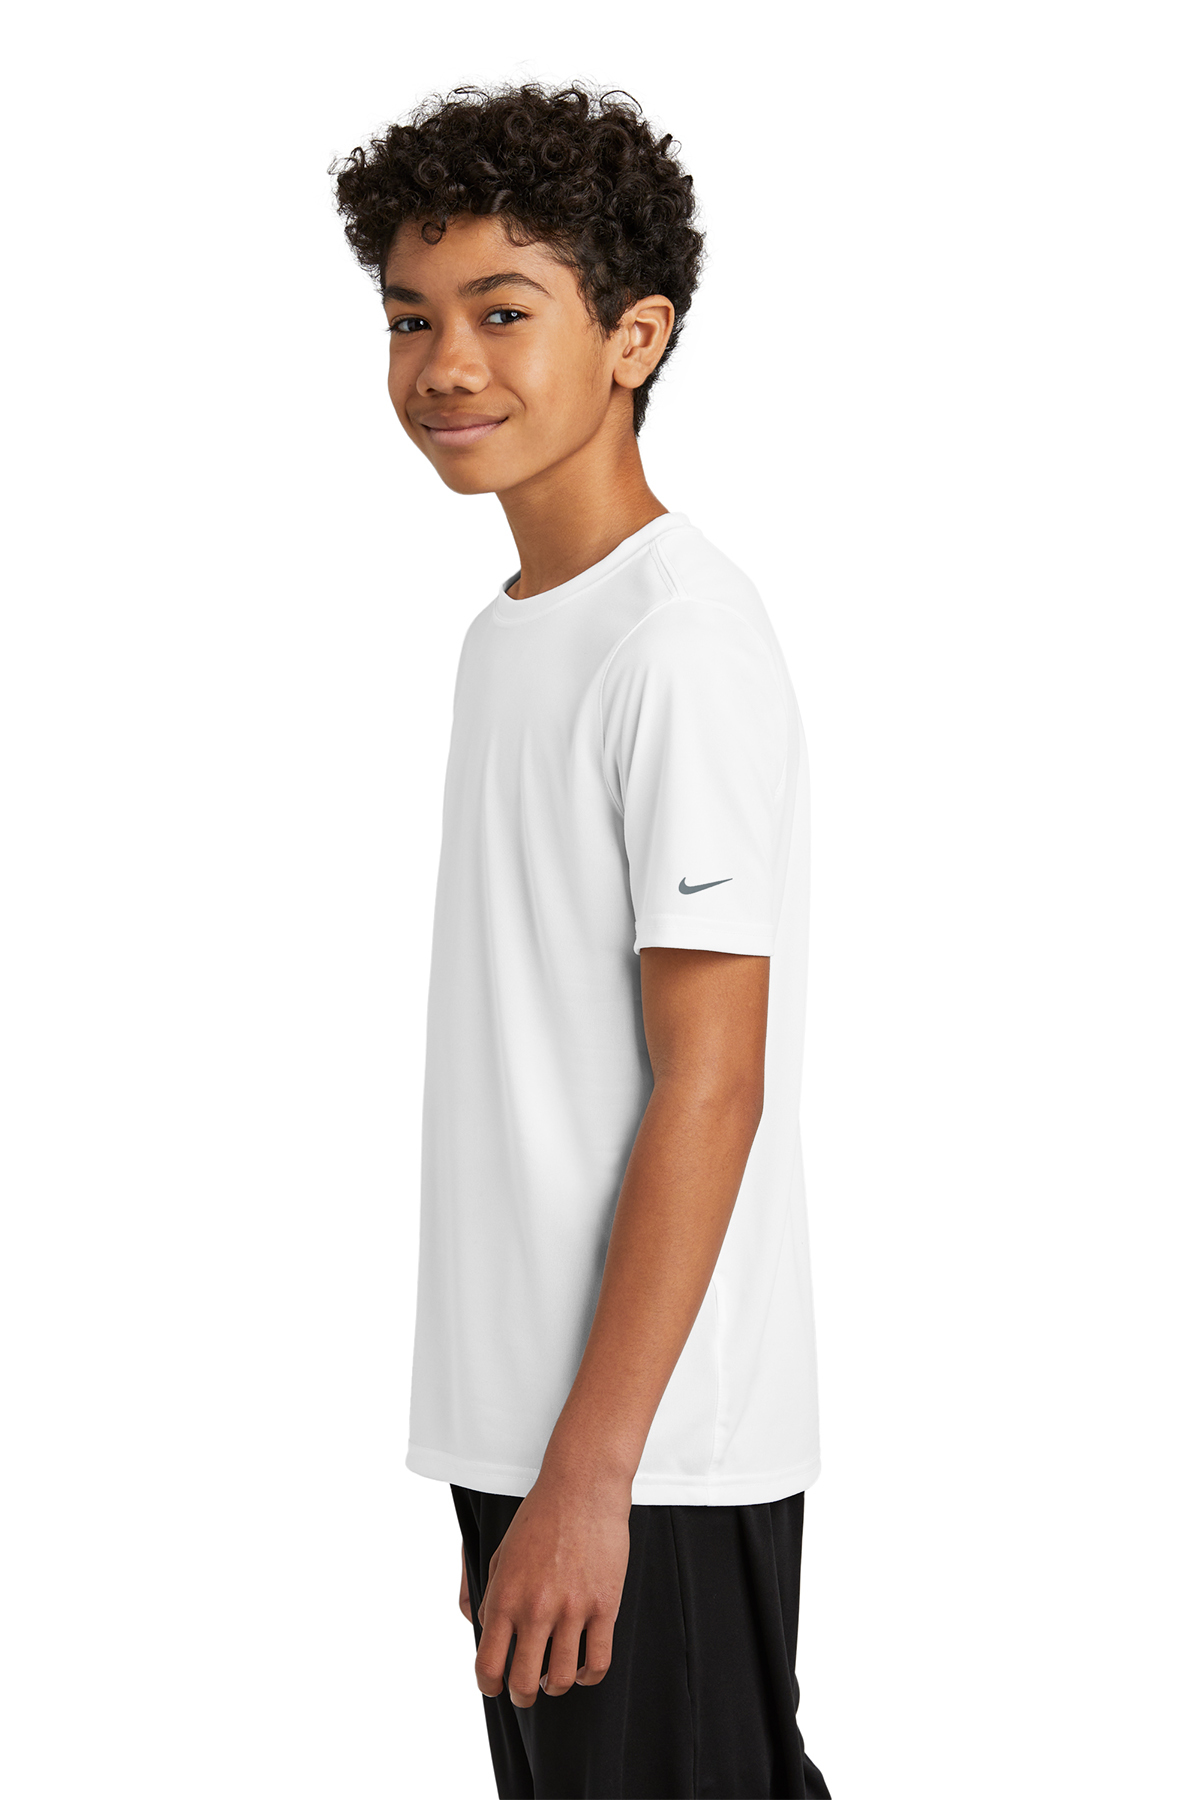 Nike Youth Swoosh Sleeve rLegend Tee | Product | SanMar